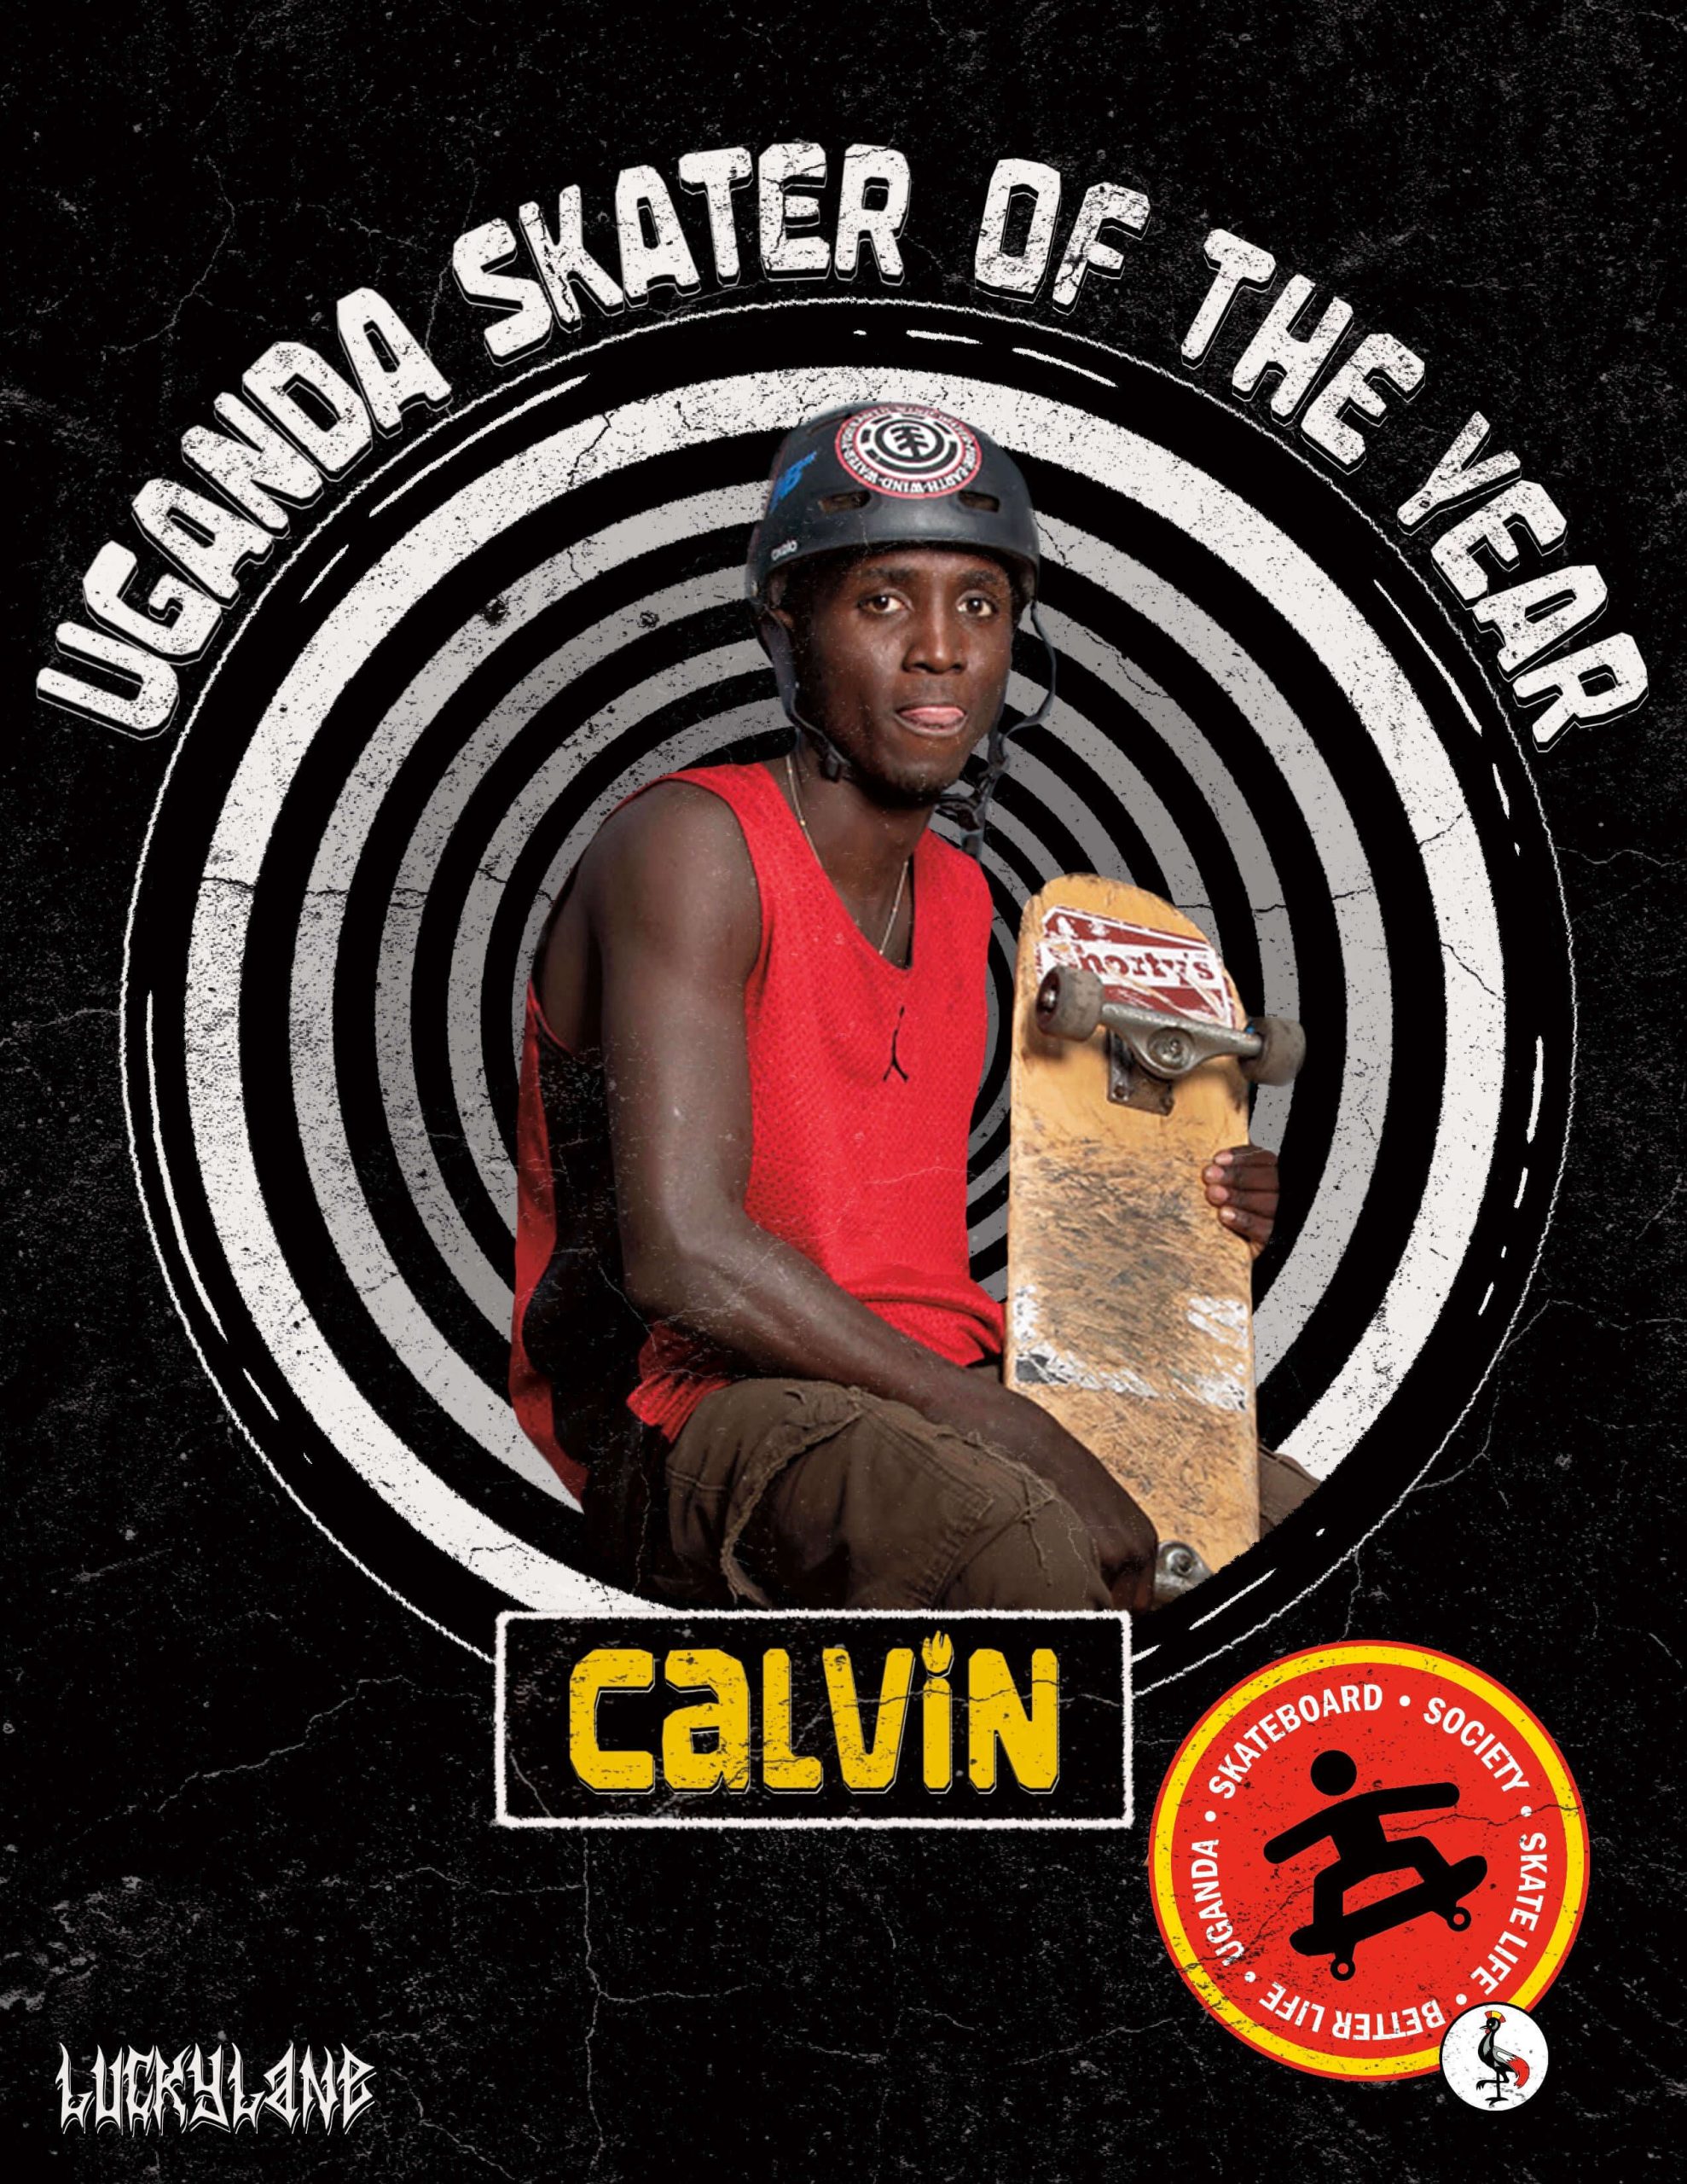 Calvin Triumphs as Uganda’s Skater Of The Year